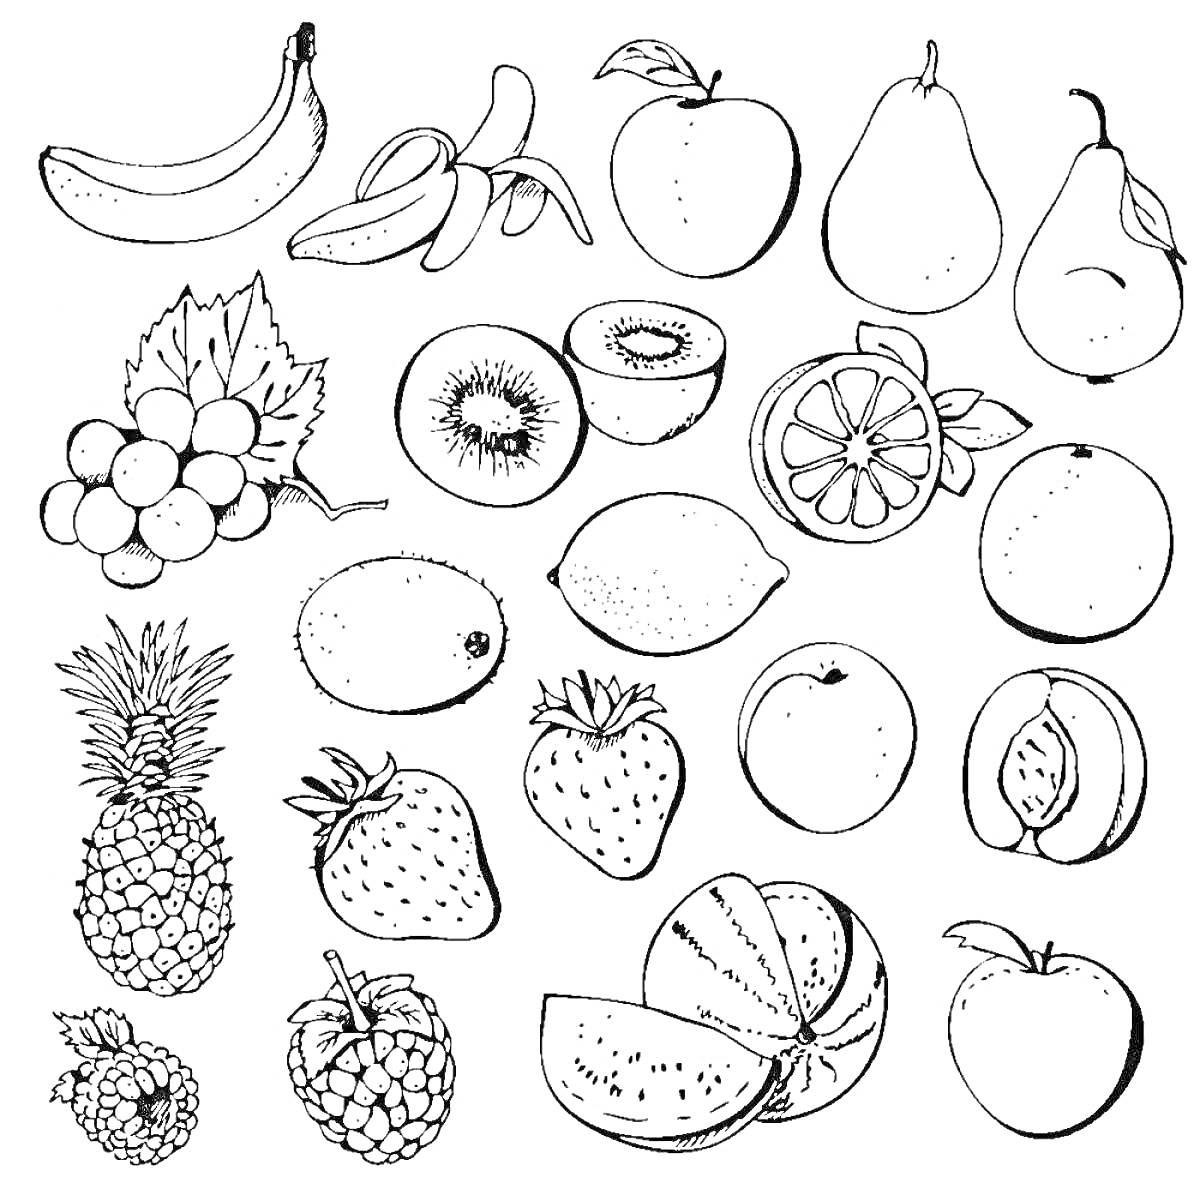 Бананы, яблоко, груша, виноград, киви, лимон, апельсин, ананас, клубника, малина, арбуз, слива, персик